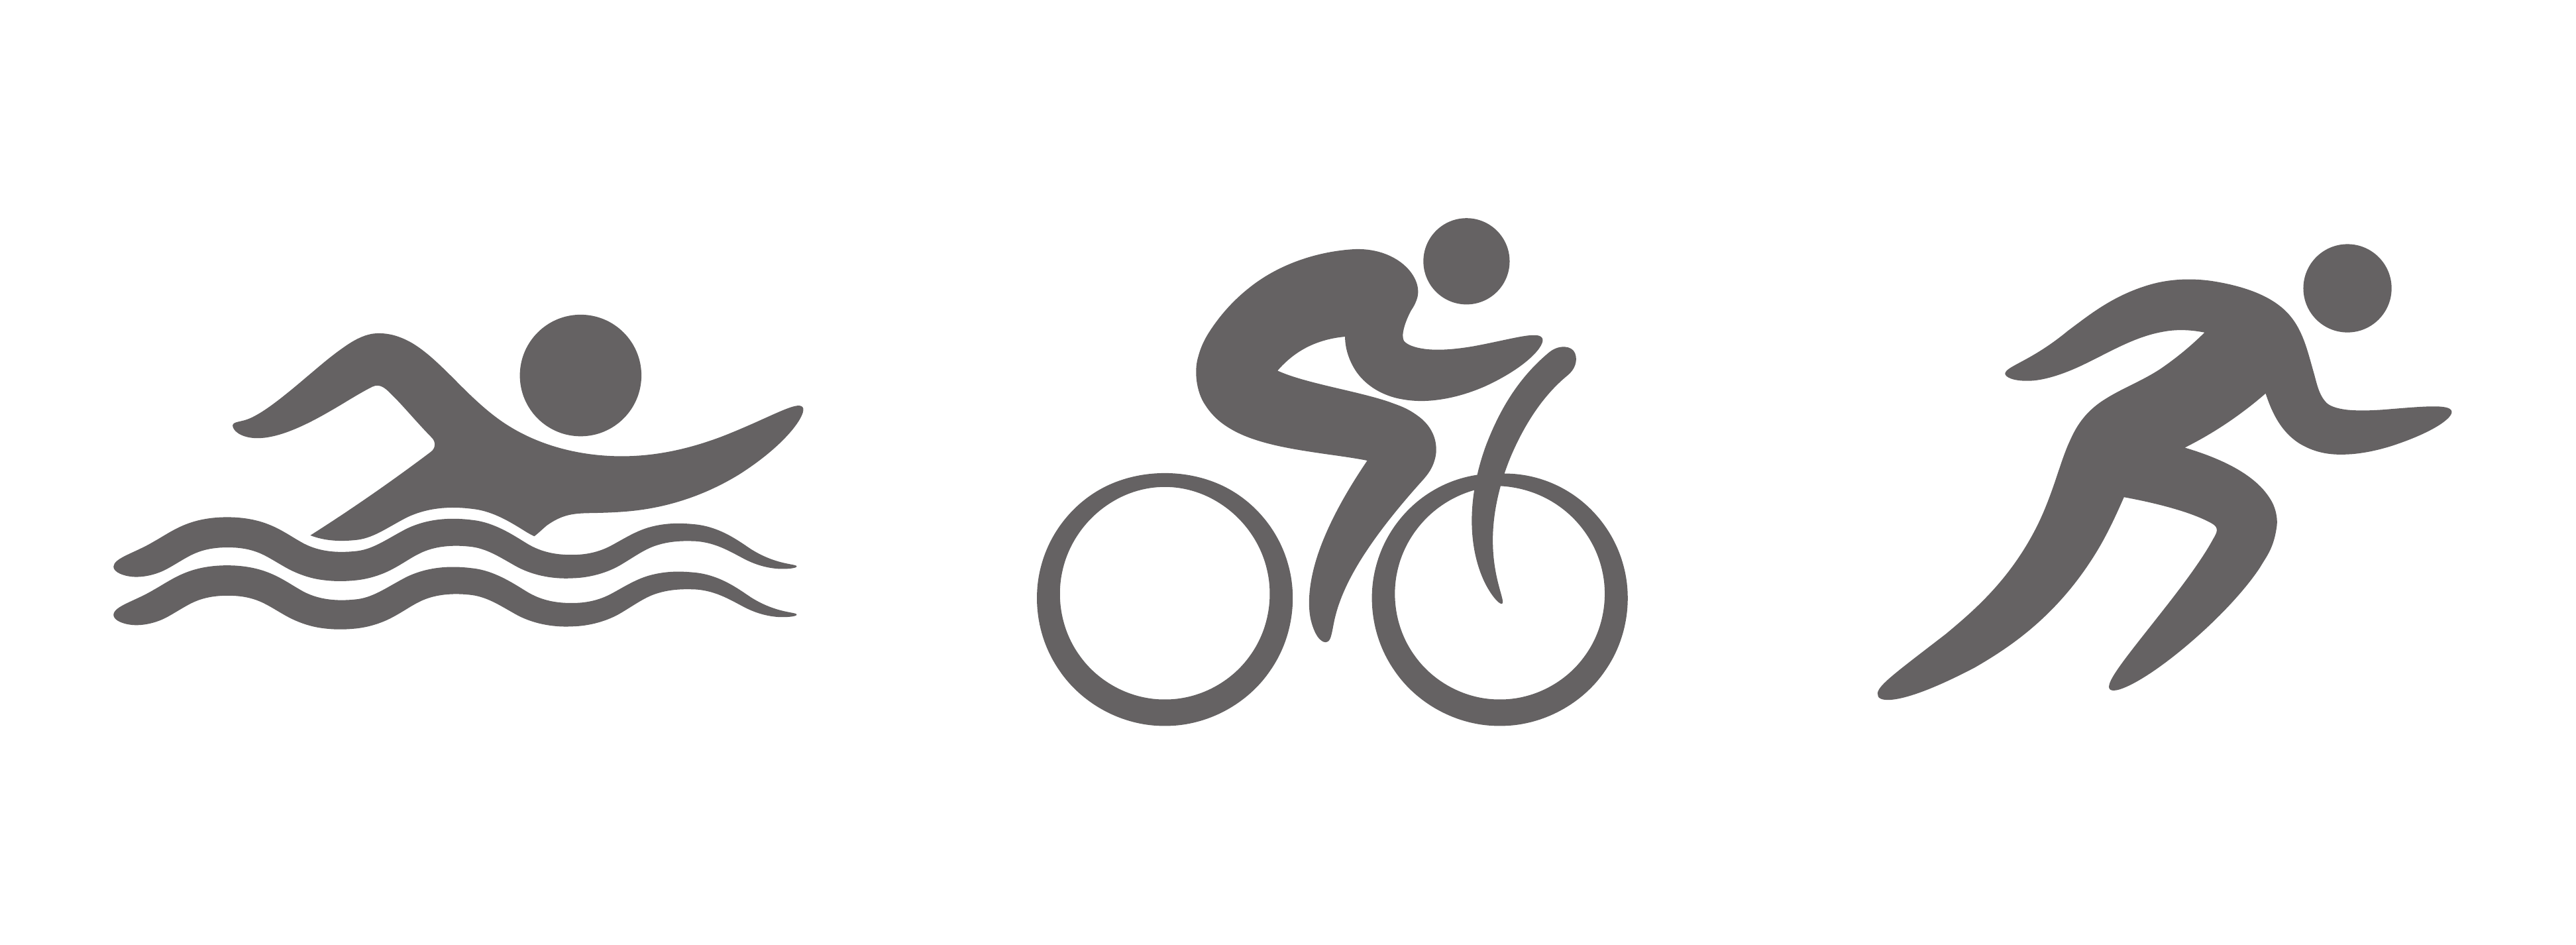 Triathlete Logo - UBsports.com Sports Life Online